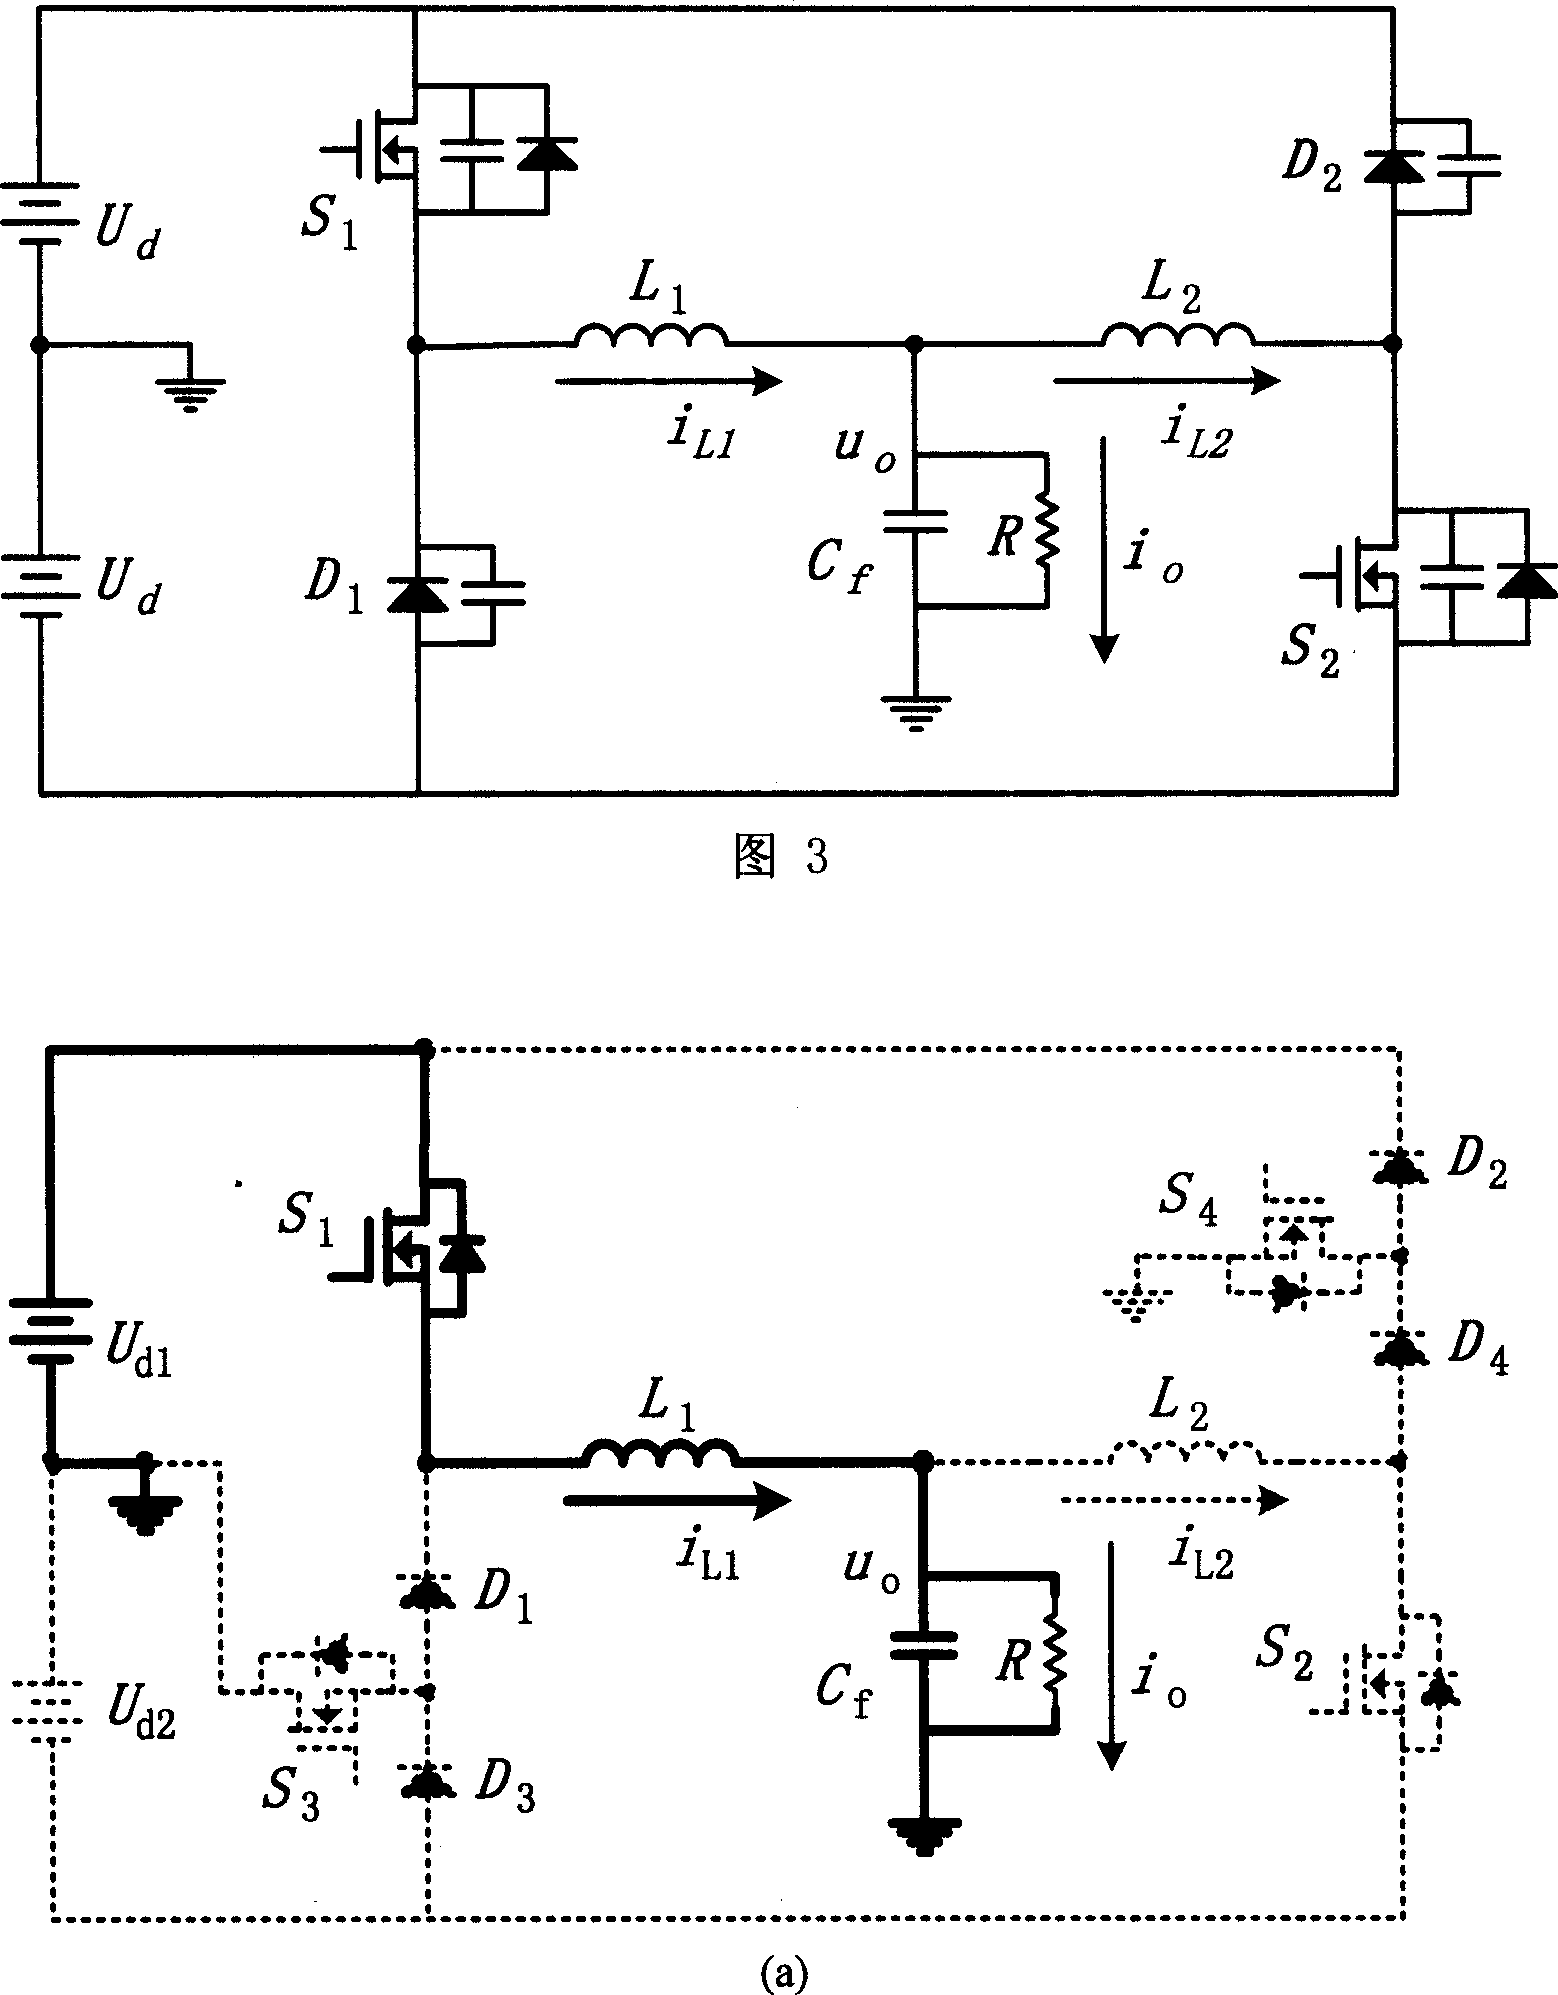 Three level double voltage reducing type semi-bridge converter